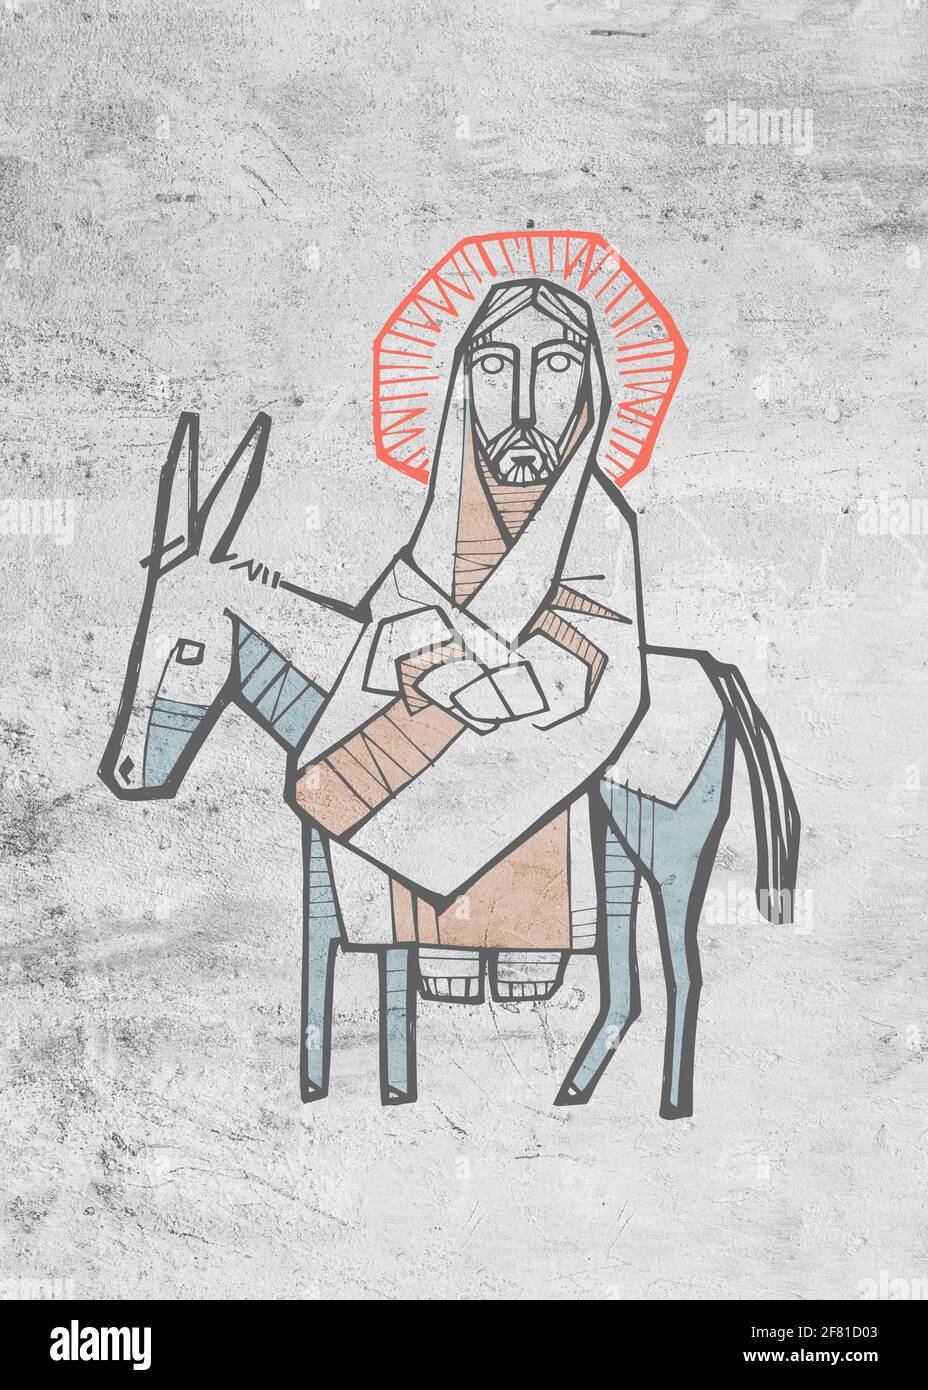 Hand drawn illustration or drawing of Jesus Christ on a donkey, entering to Jerusalem Stock Photo